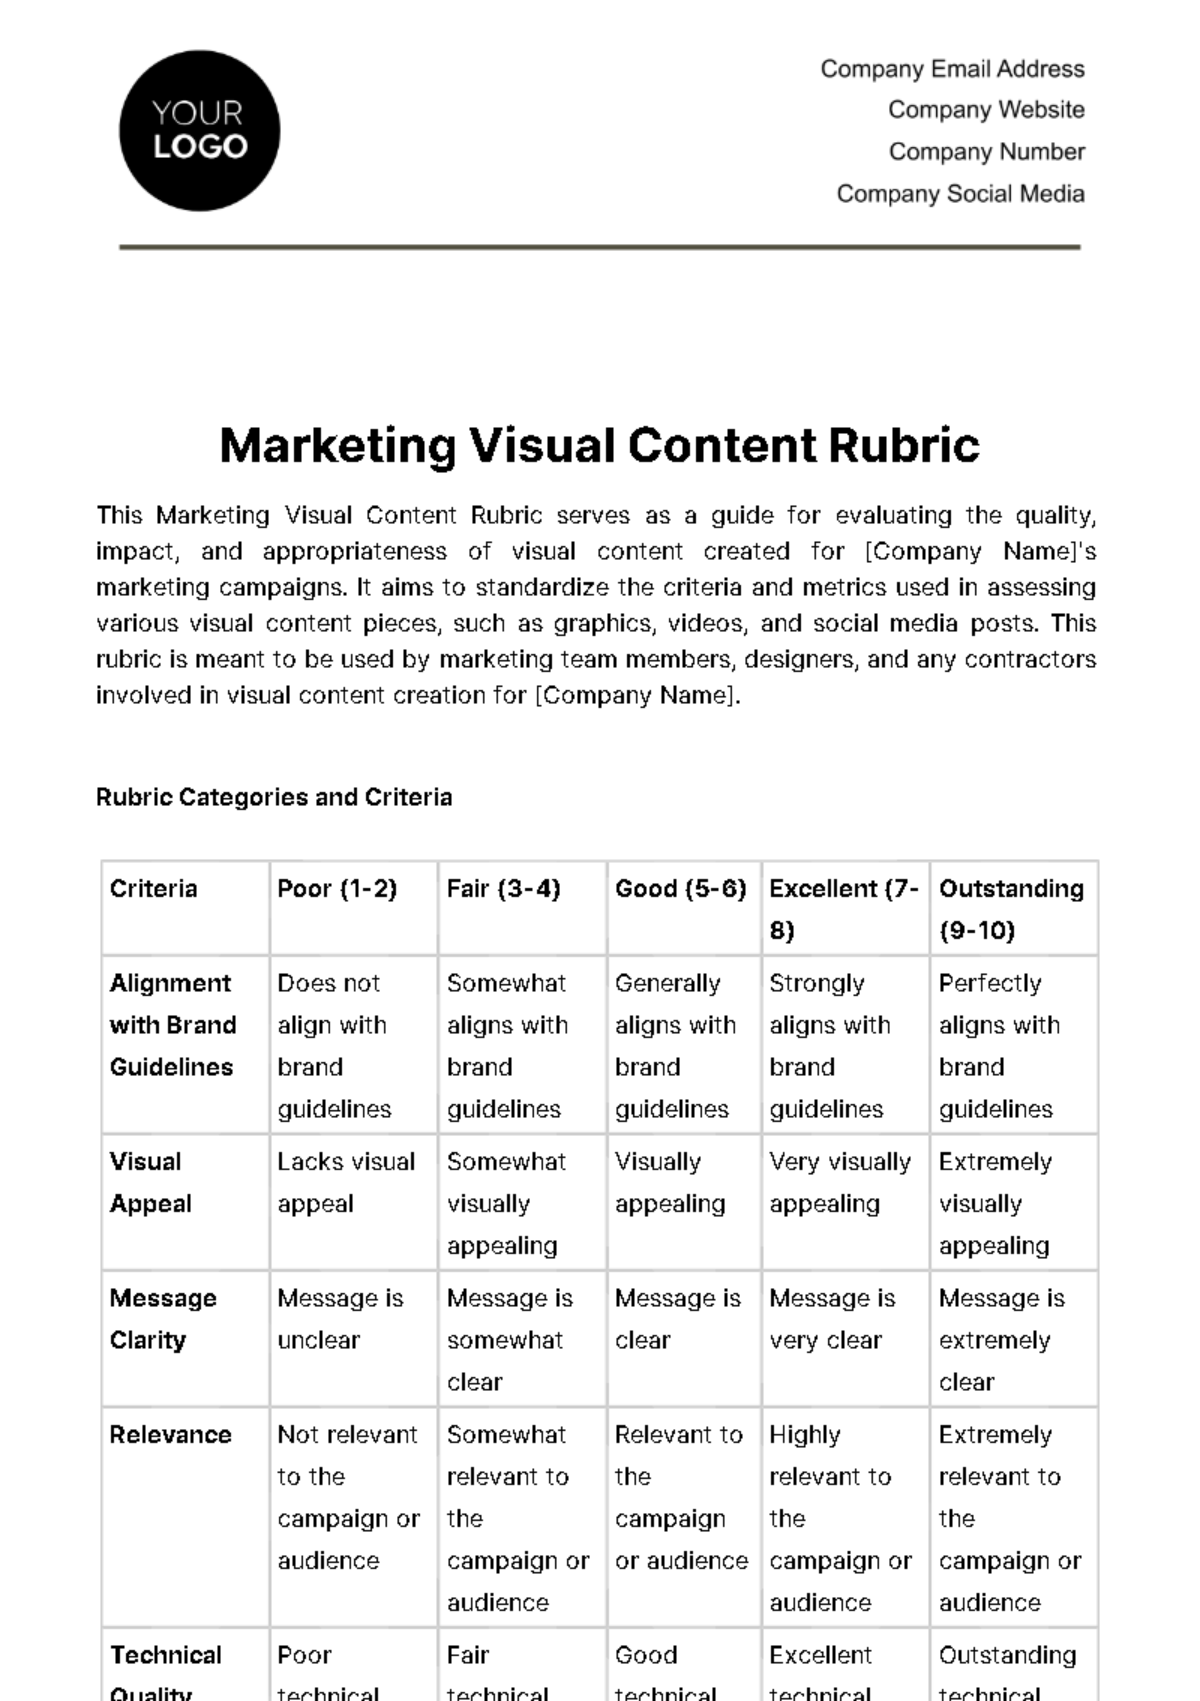 Marketing Visual Content Rubric Template